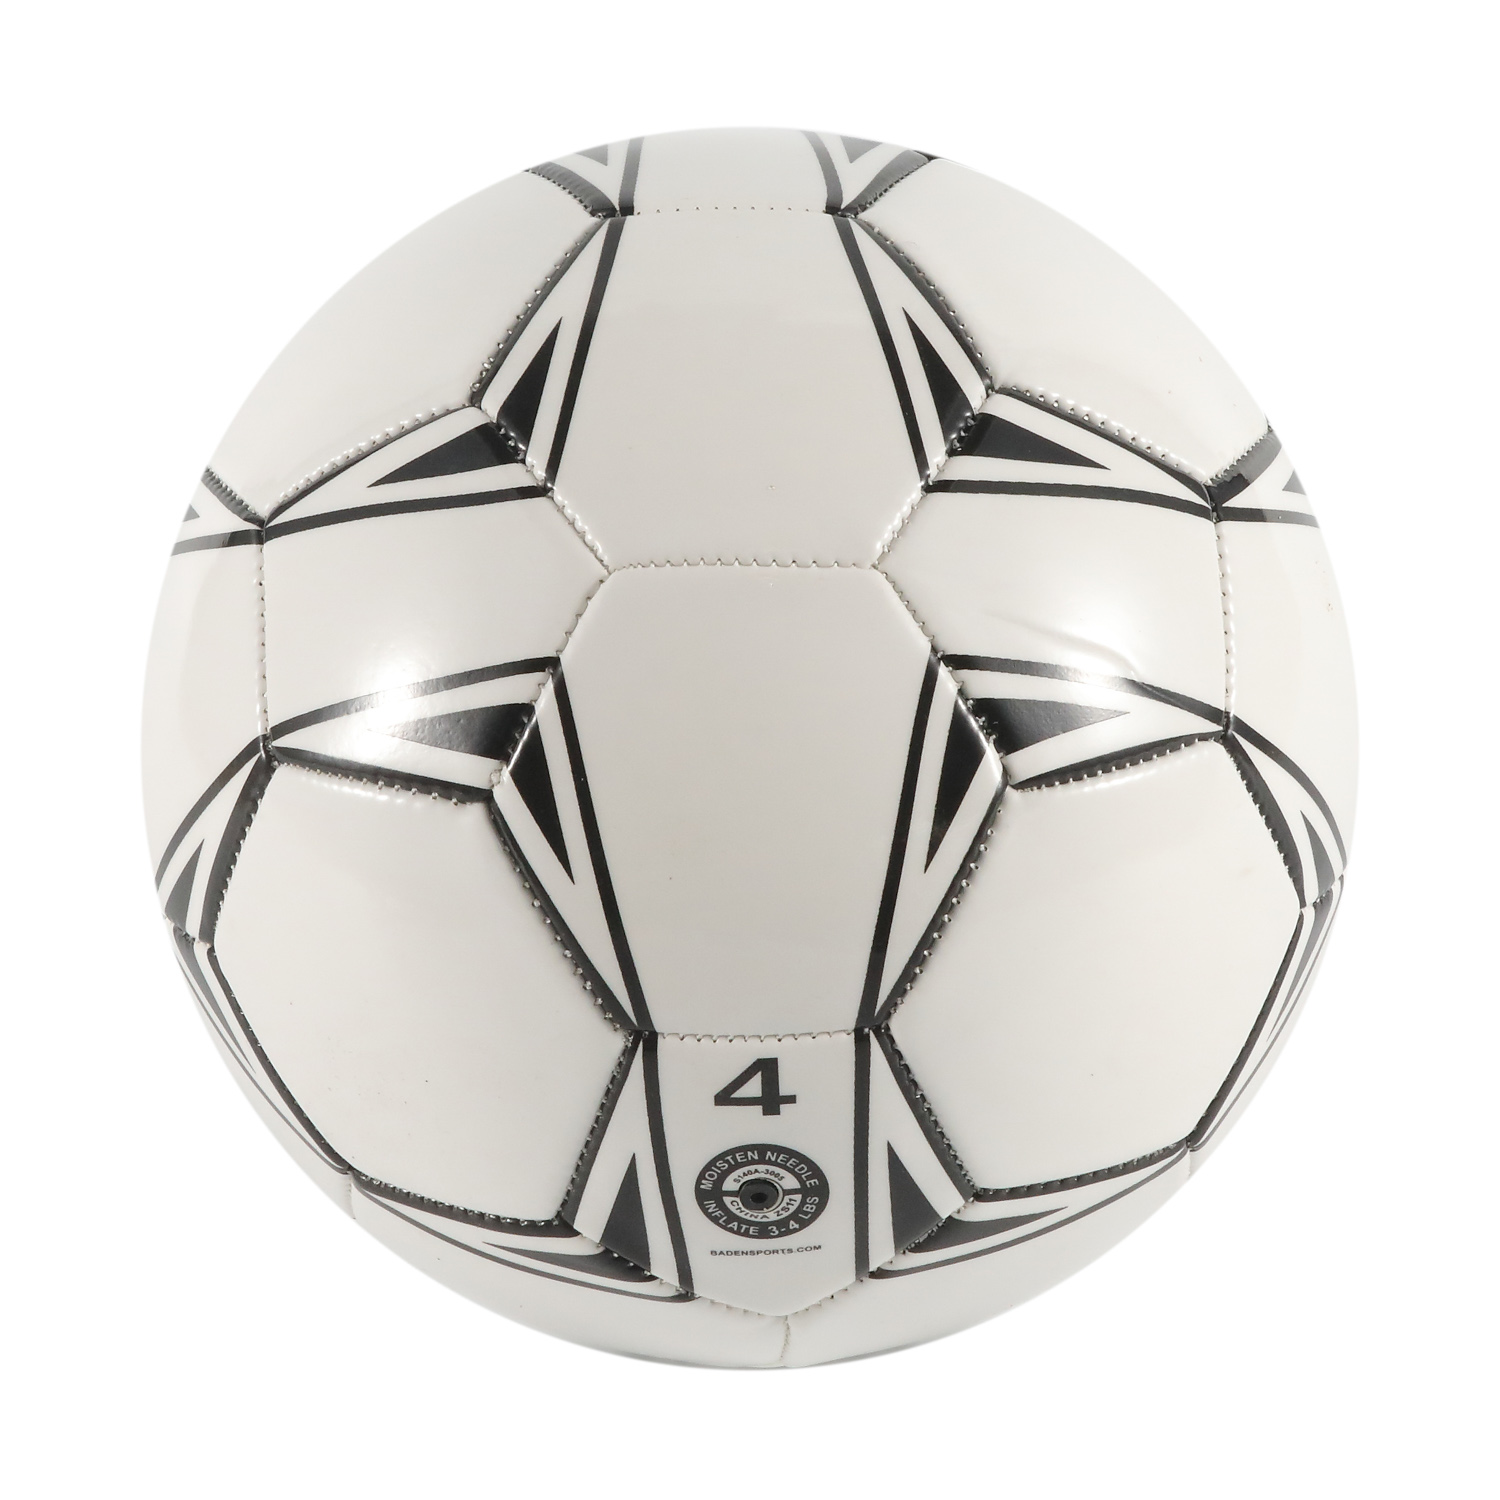 कस्टम लोगो एकाधिक आकार फुटबॉल प्रशिक्षण पीवीसी कवर सॉकर बॉल